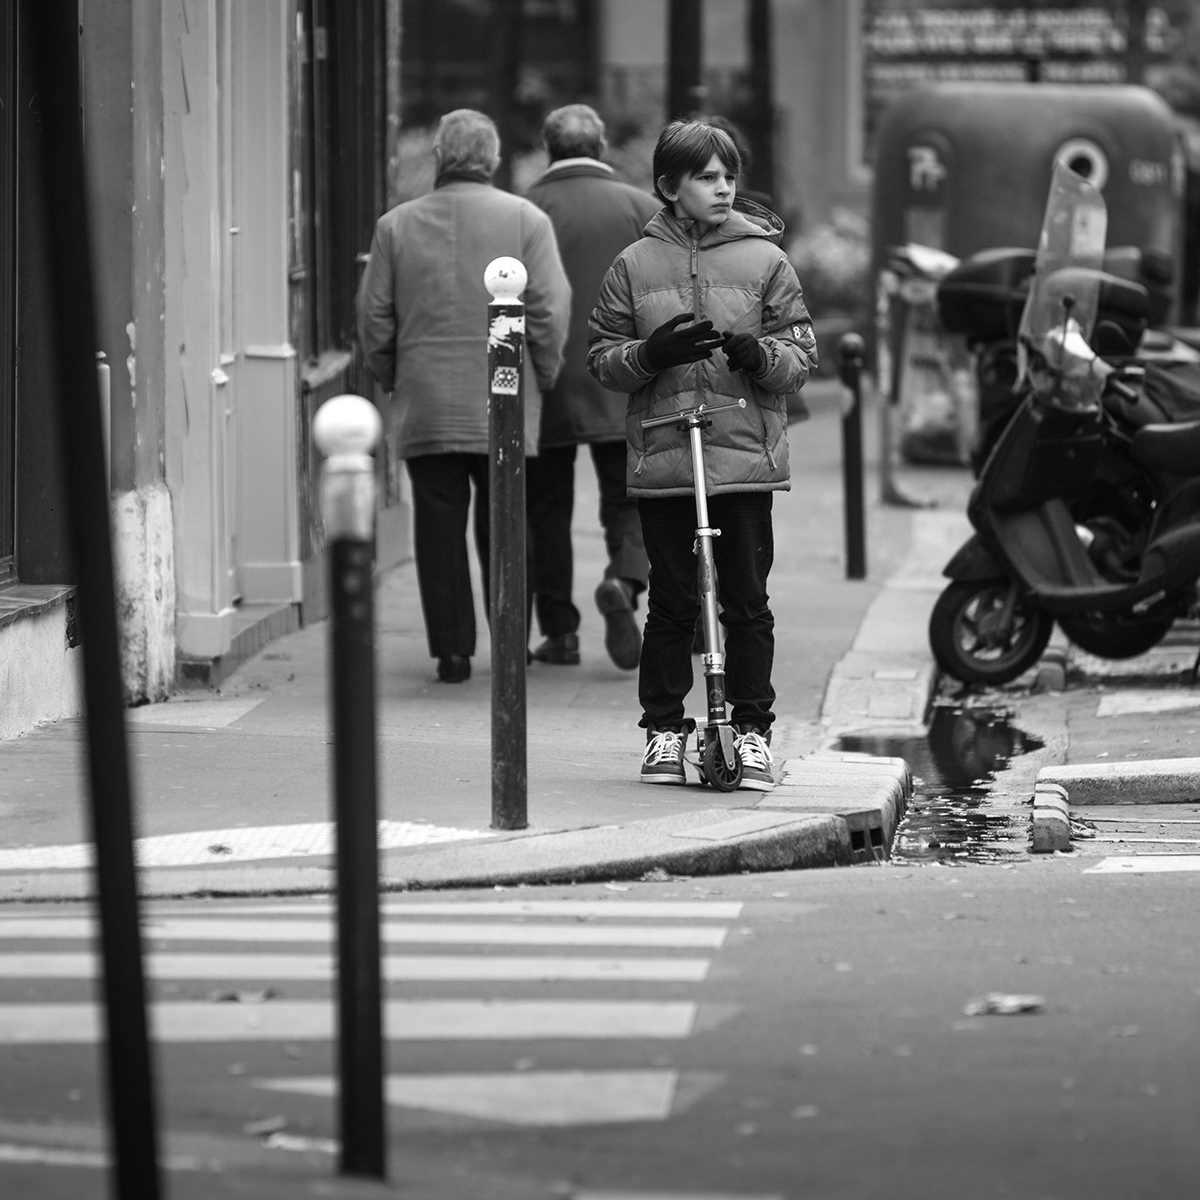 Paris  rue de charonne  street life  people   neighbourhood Documentary  black and white square format